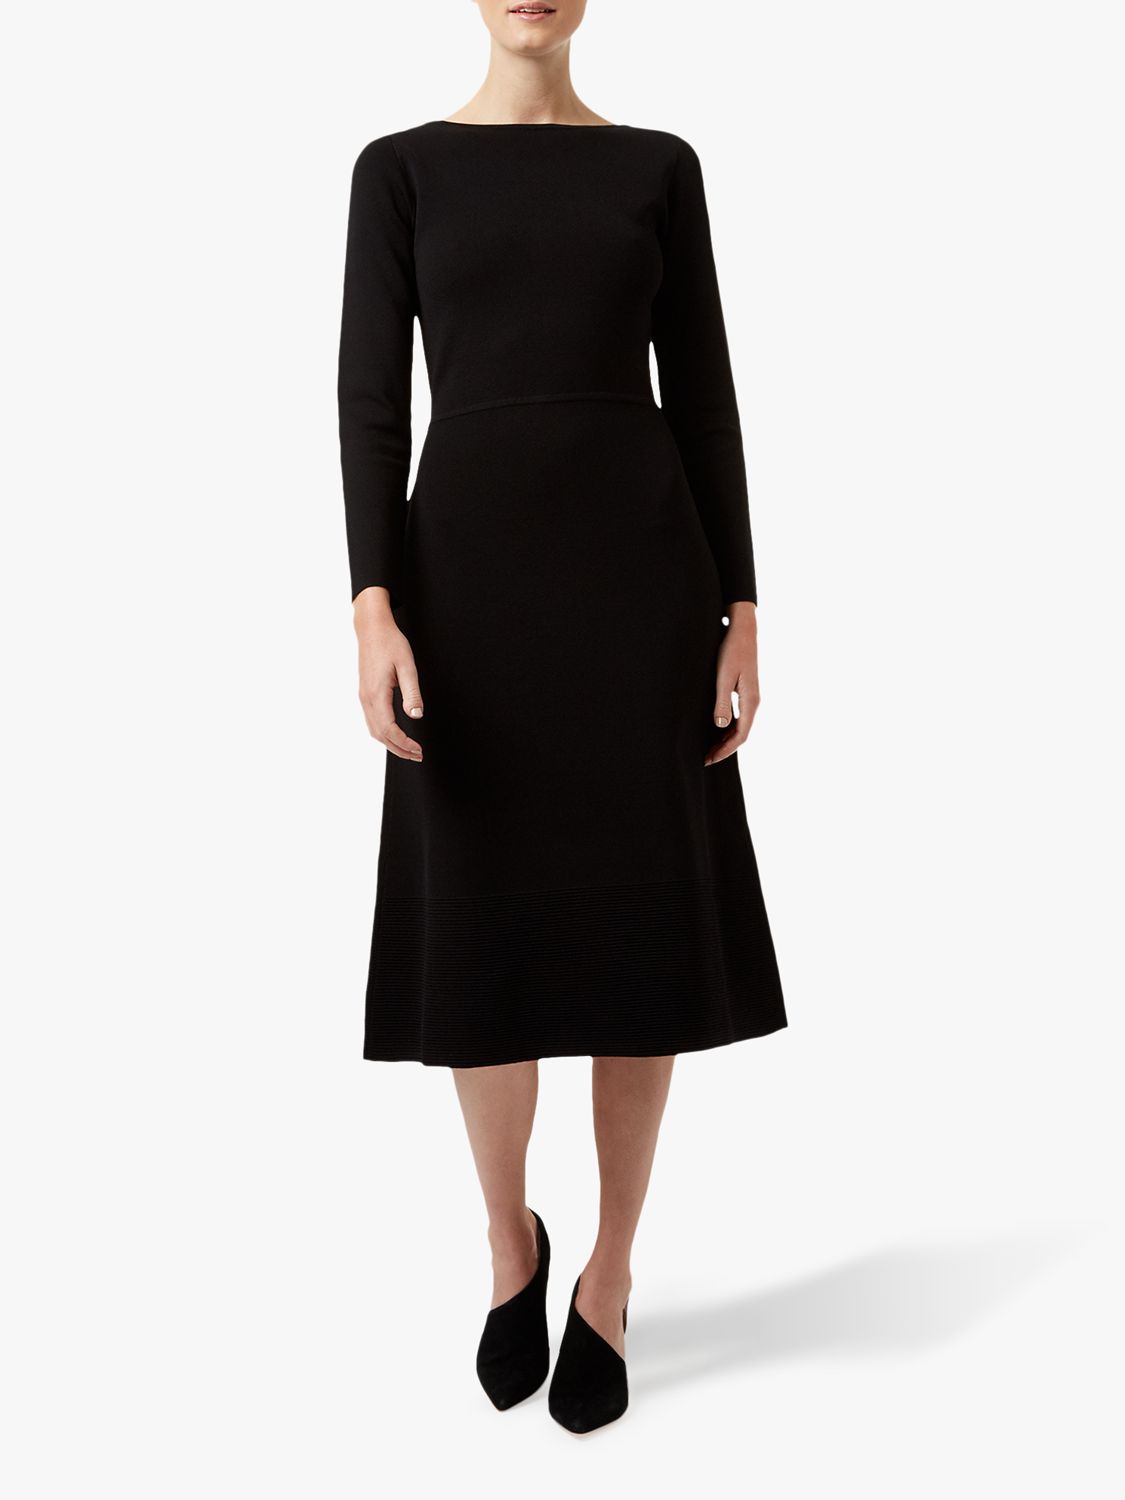 Hobbs Rebecca Knitted Dress, Black, 6